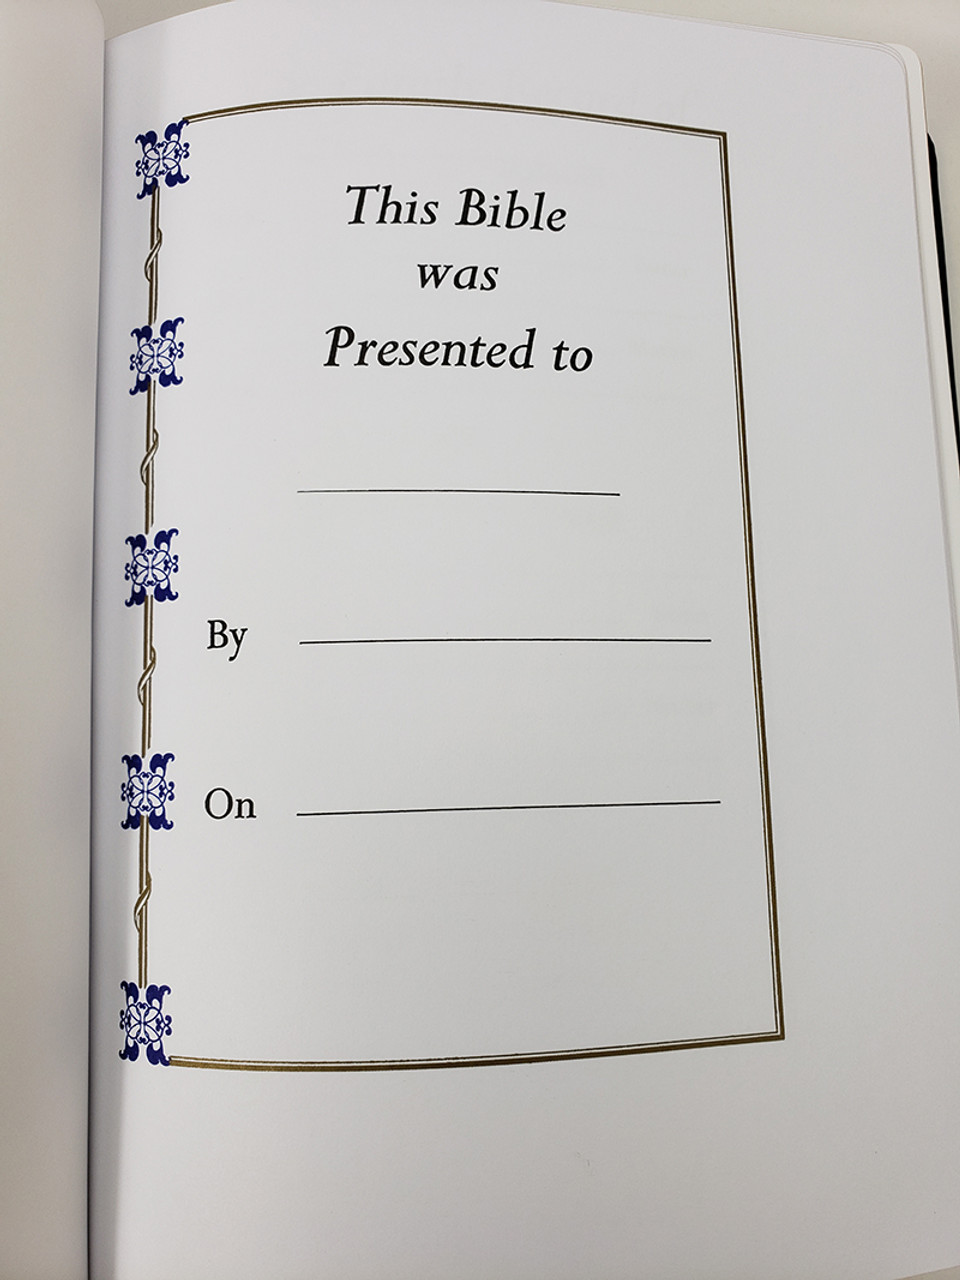 Accu-Gel Bible Highlighters - 10 Piece Inductive Study Kit